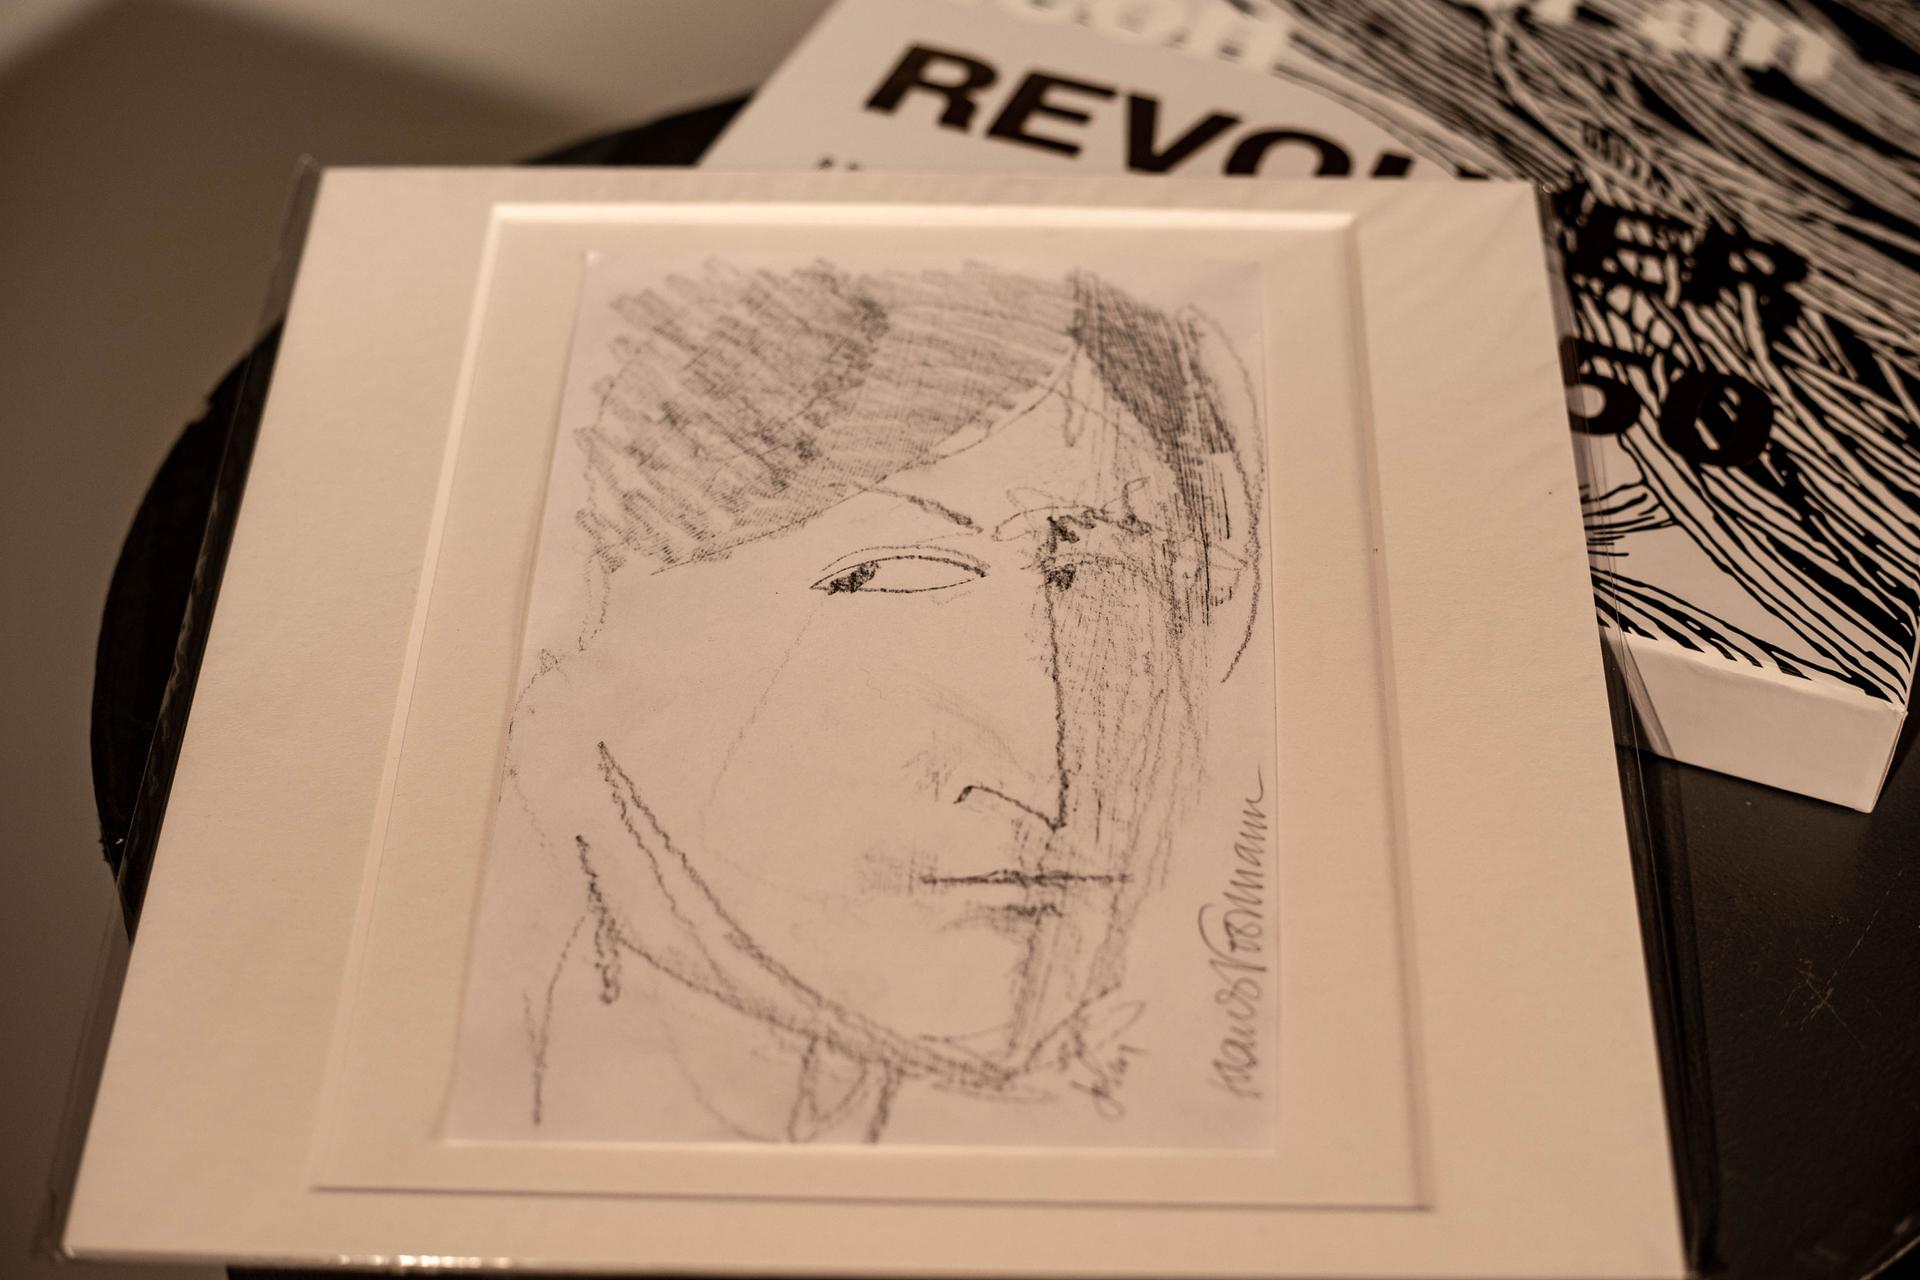 A pen and ink portrait of John Lennon by Klaus Voorman